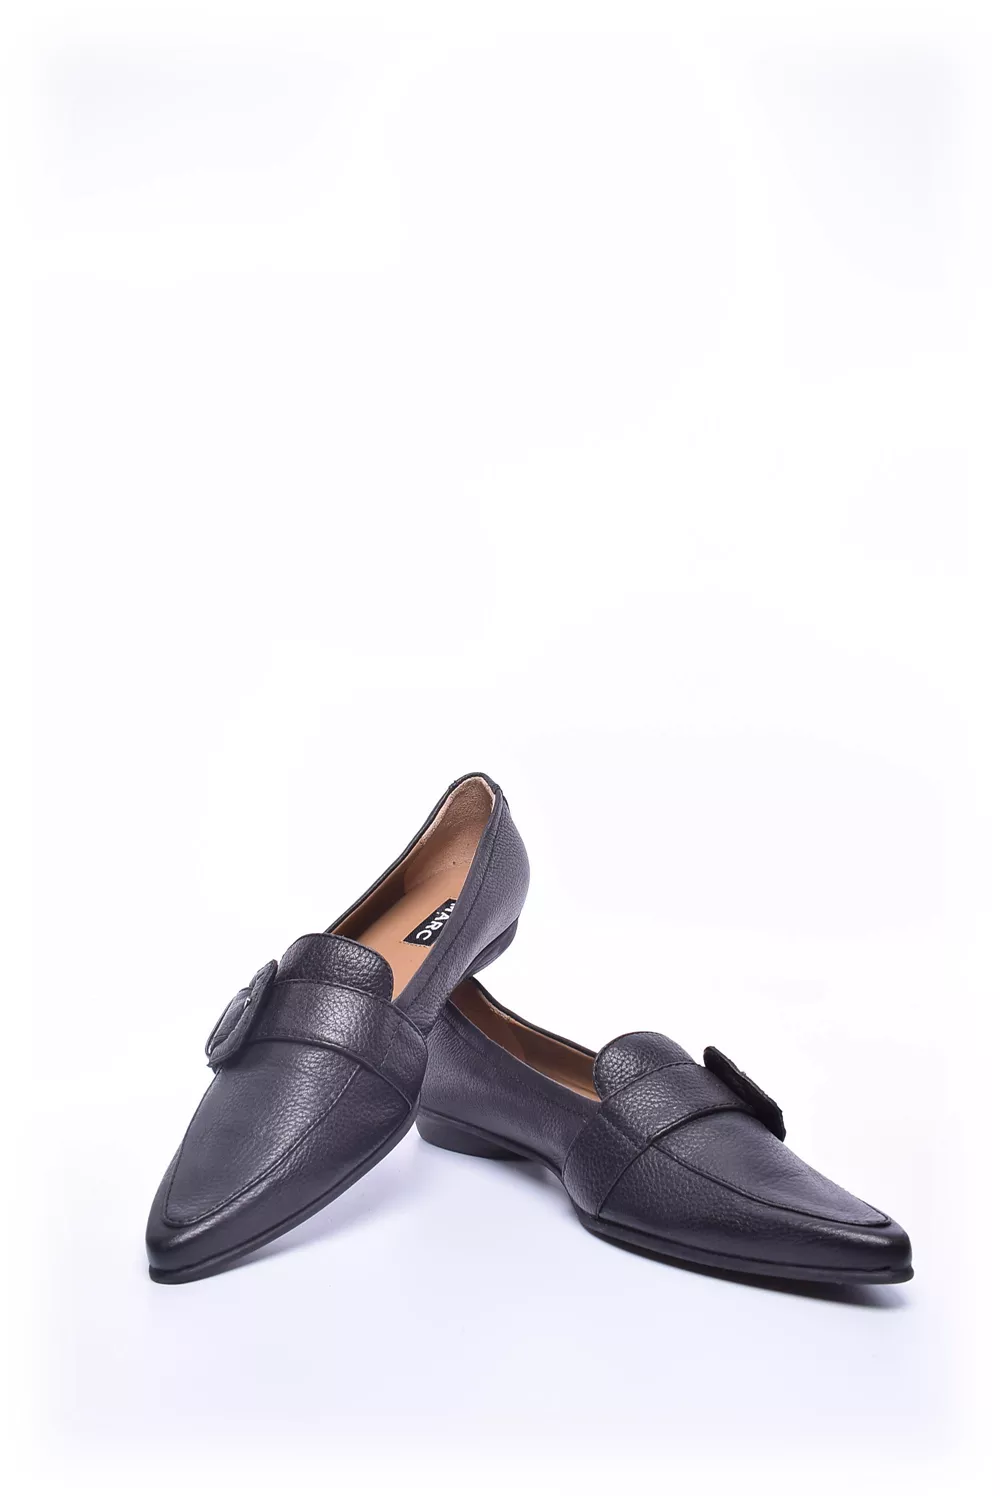 Pantofi stiletto dama [3]